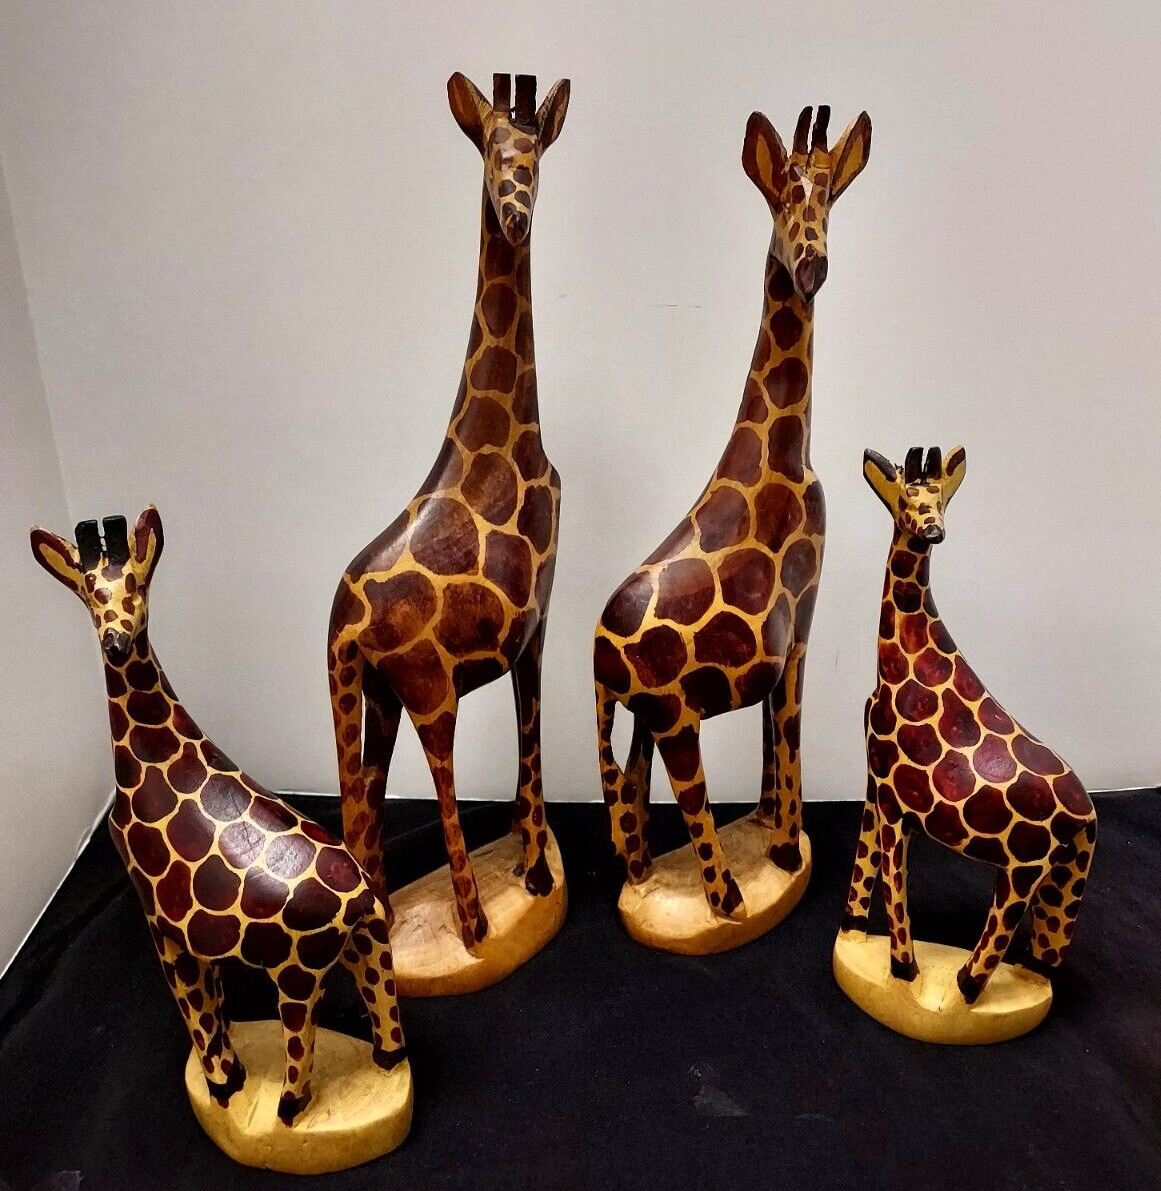 Vintage Set of 4 Hand Carved Wooden Giraffe Figurines - Africa - Safari Animals